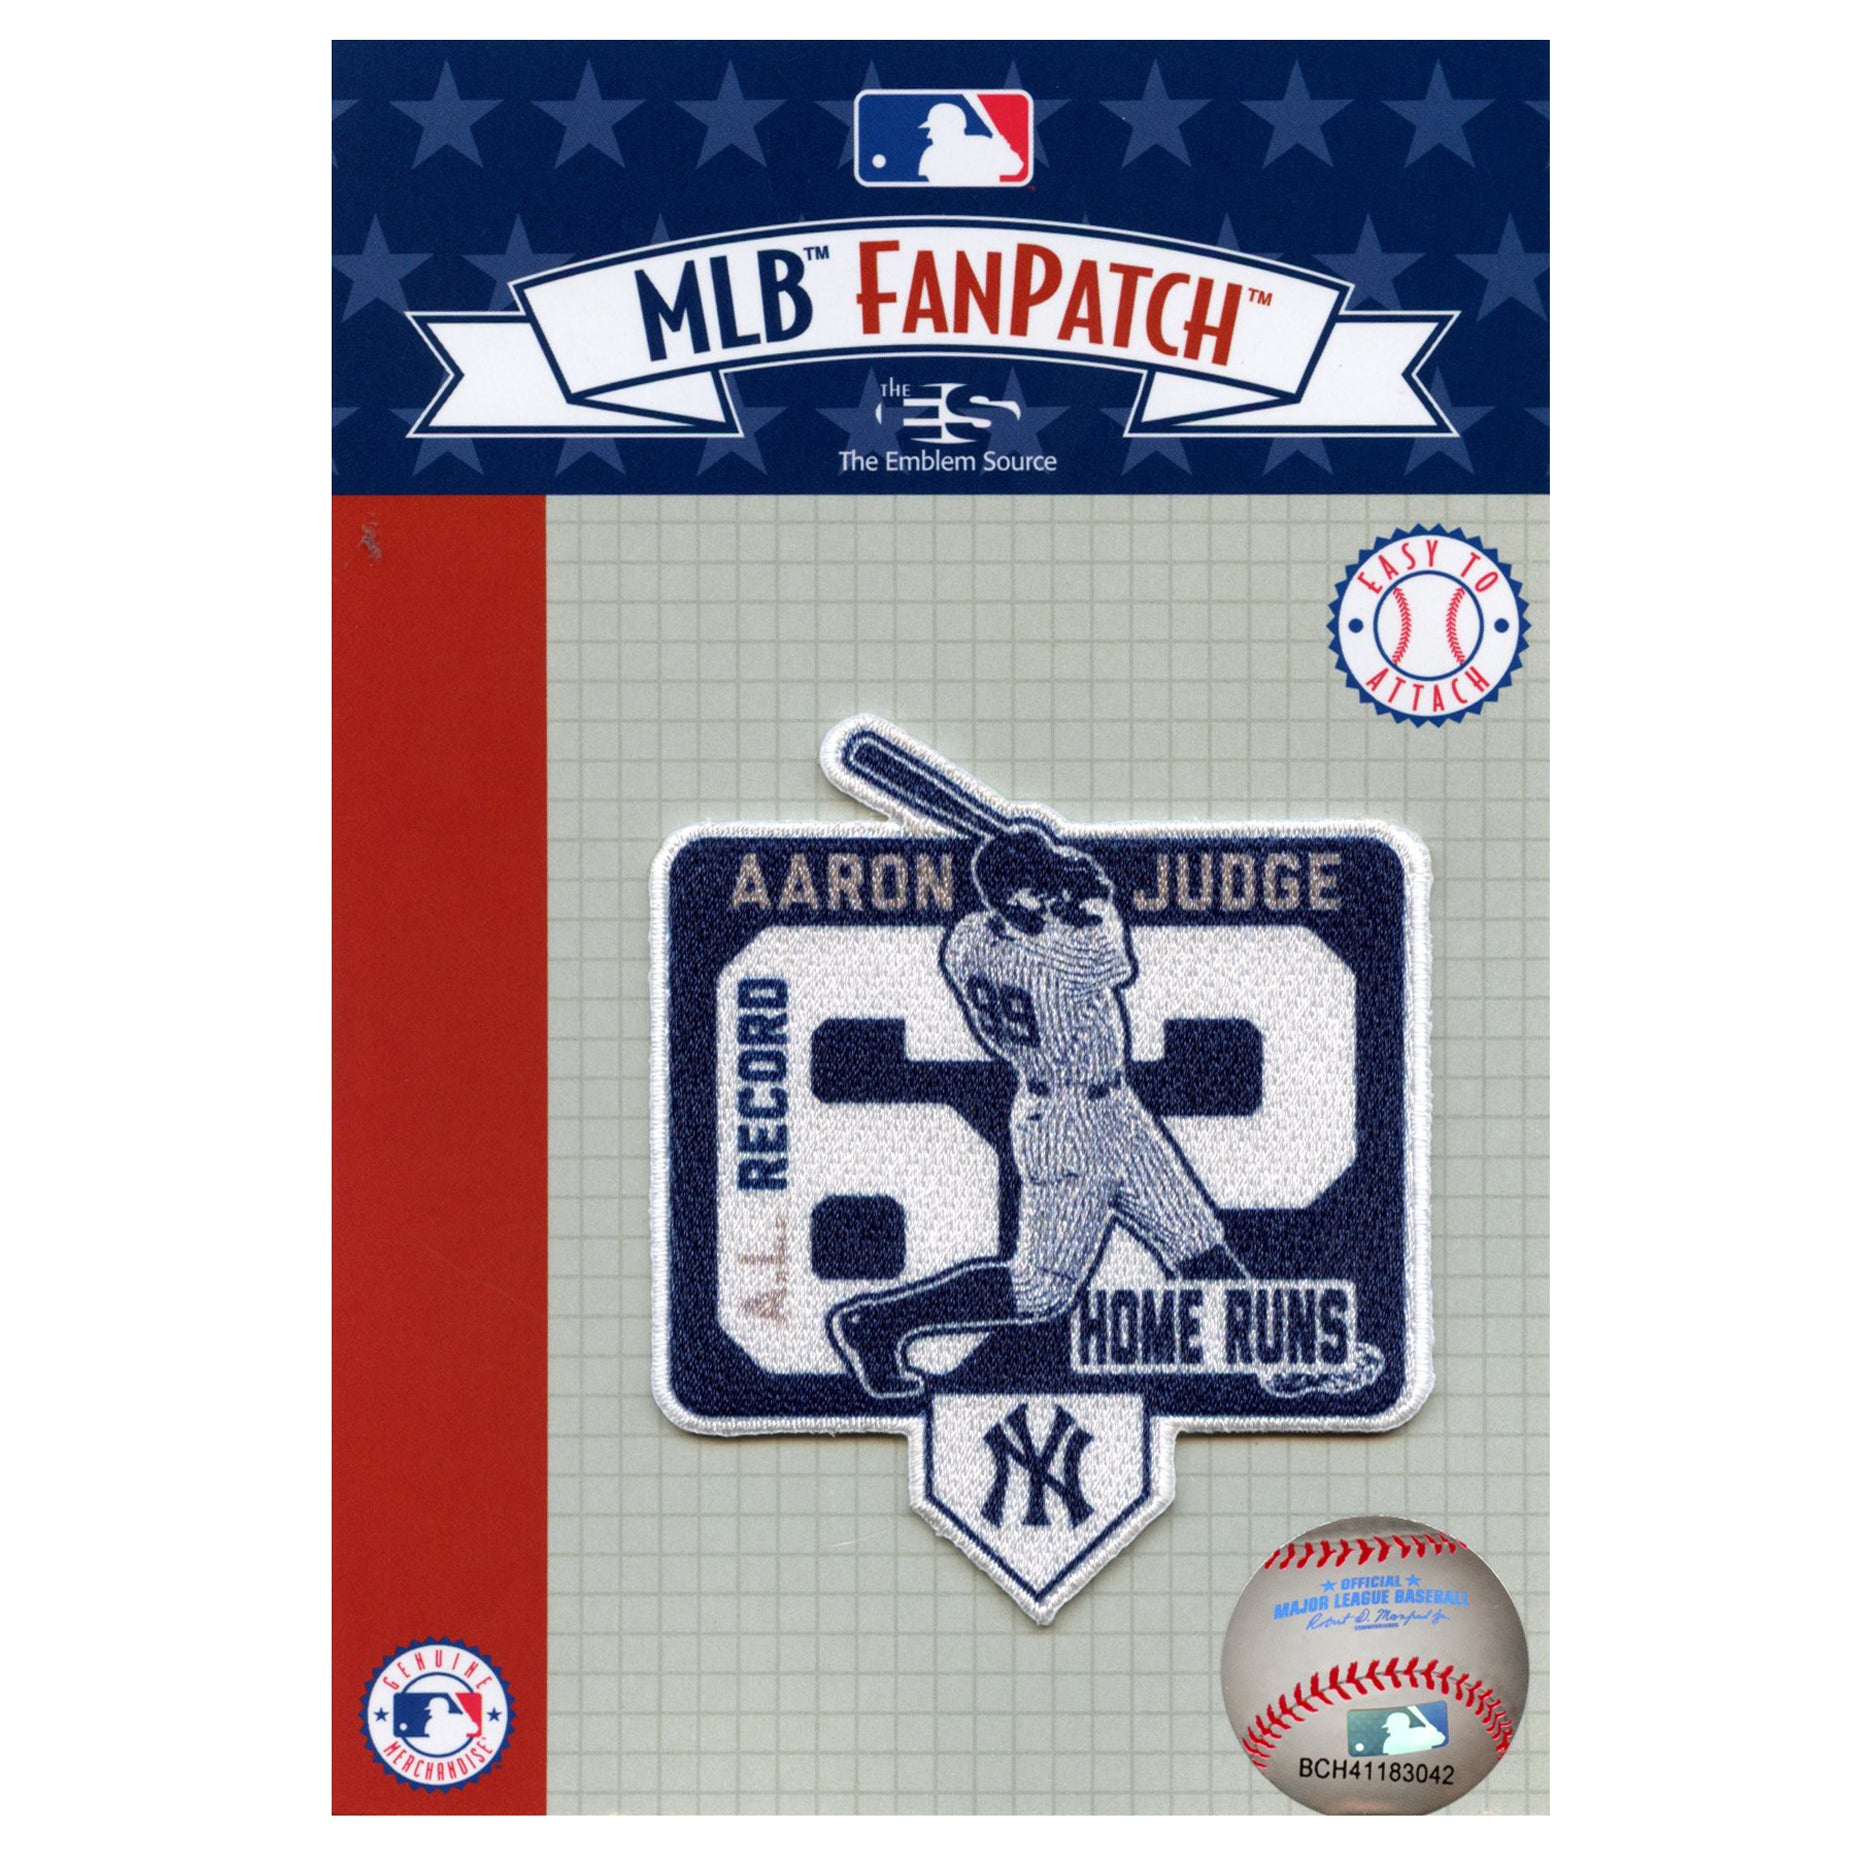  Outerstuff Aaron Judge #99 New York Yankees Home